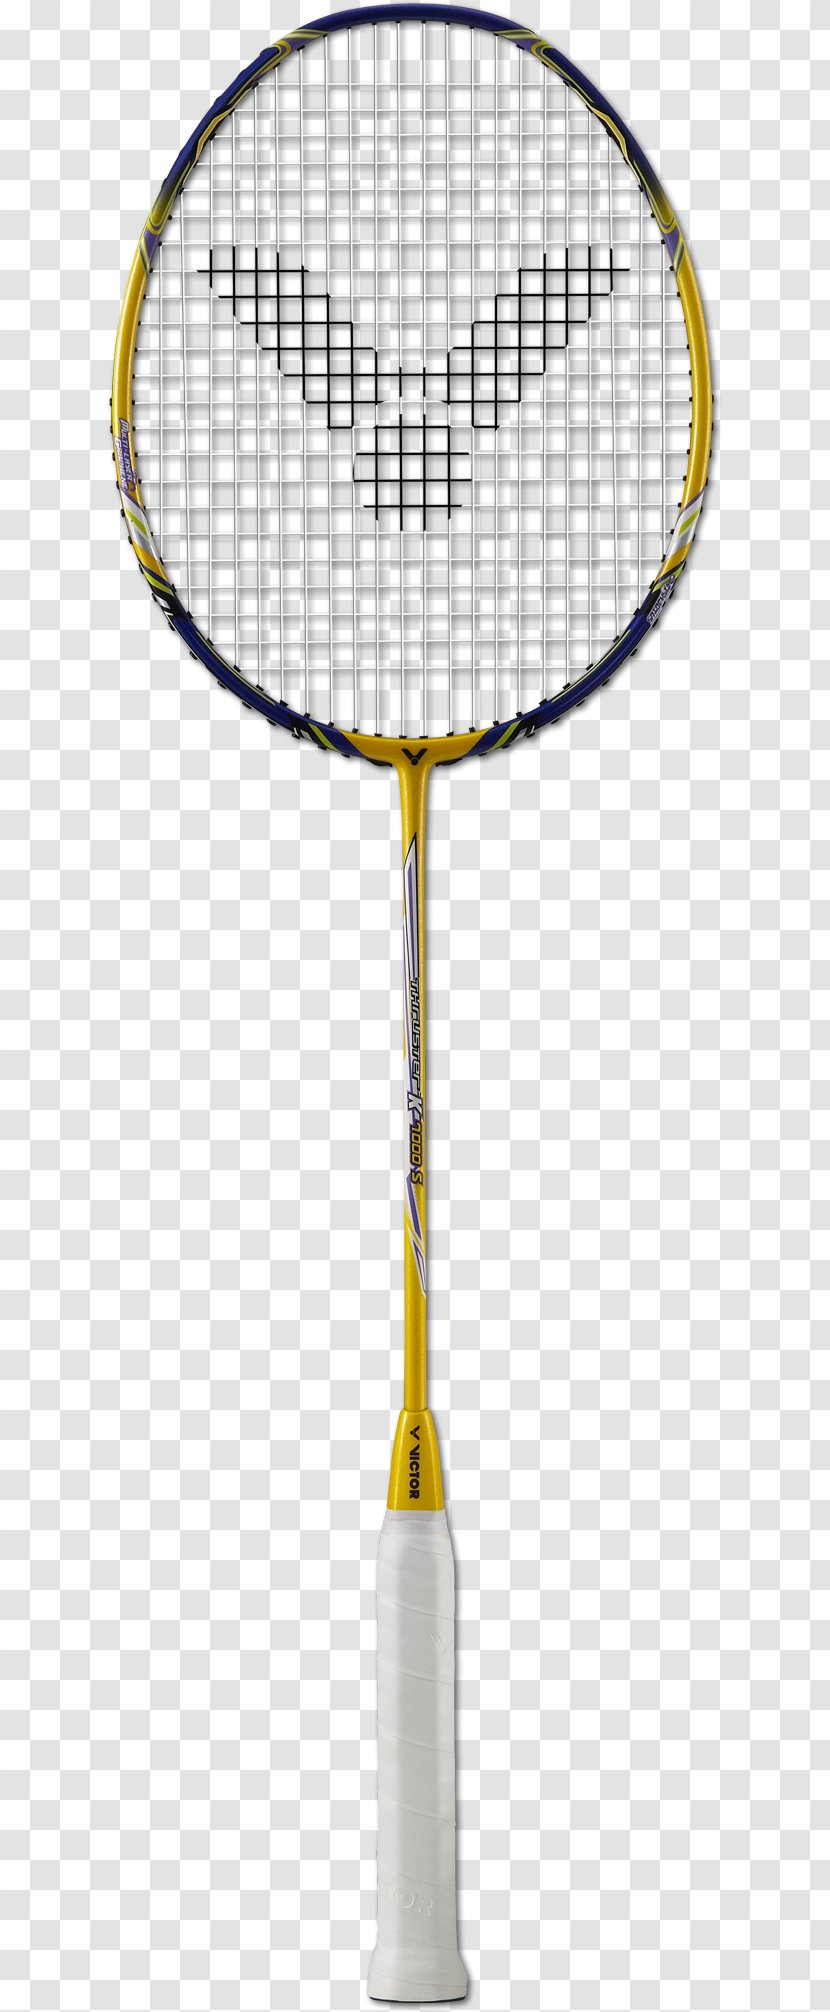 Badmintonracket Tennis Rakieta Tenisowa - Racket Accessory - Badminton Transparent PNG